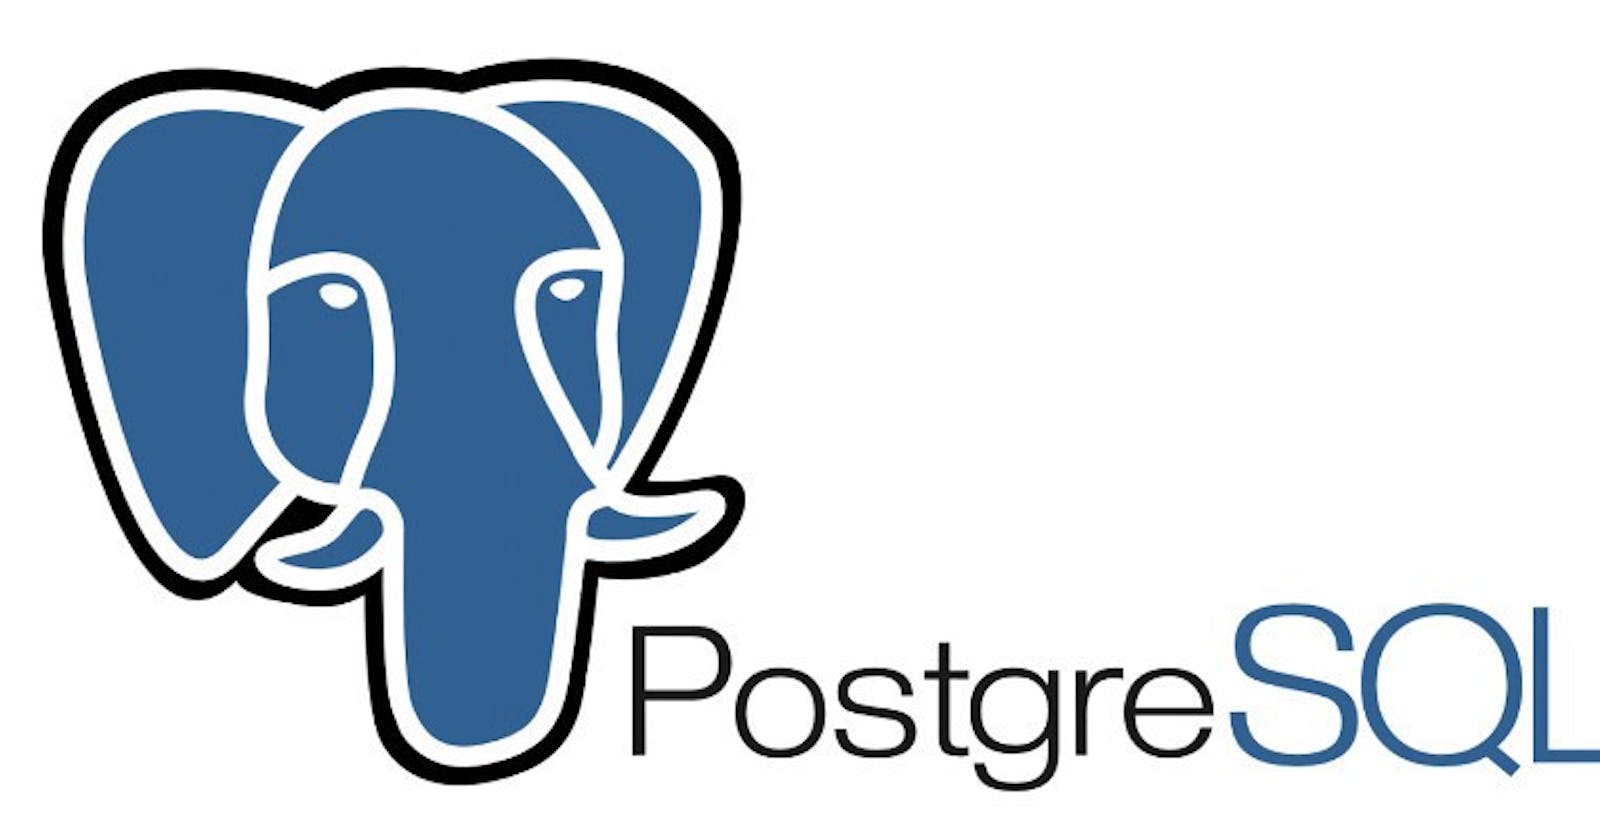 How to Install PostgreSQL on Ubuntu, Linux & Mac